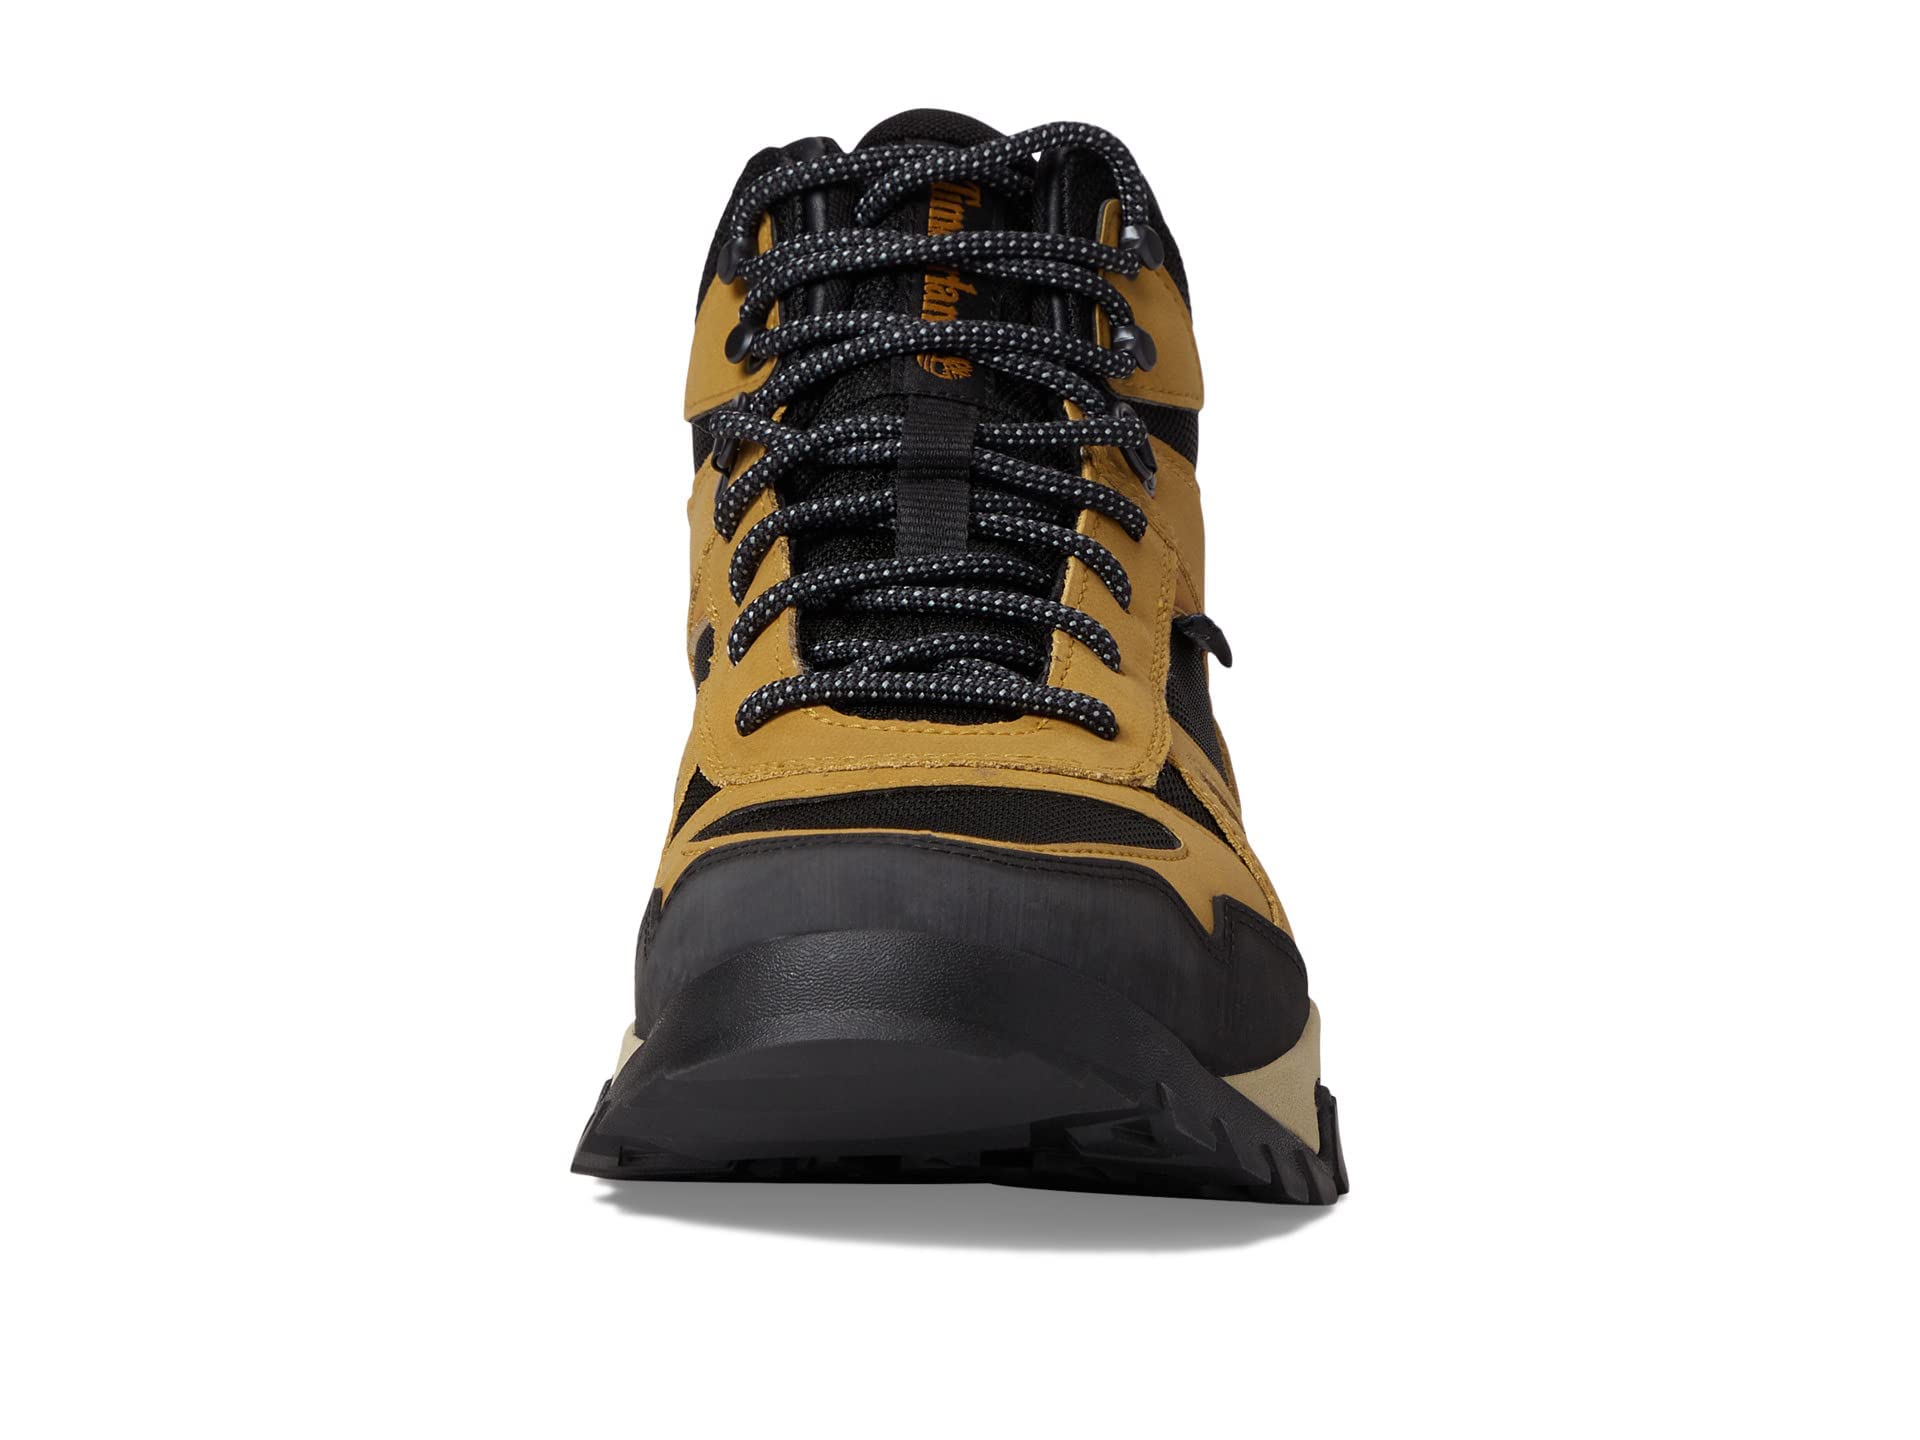 Timberland Men's Lincoln Peak Waterproof Hiking Boots